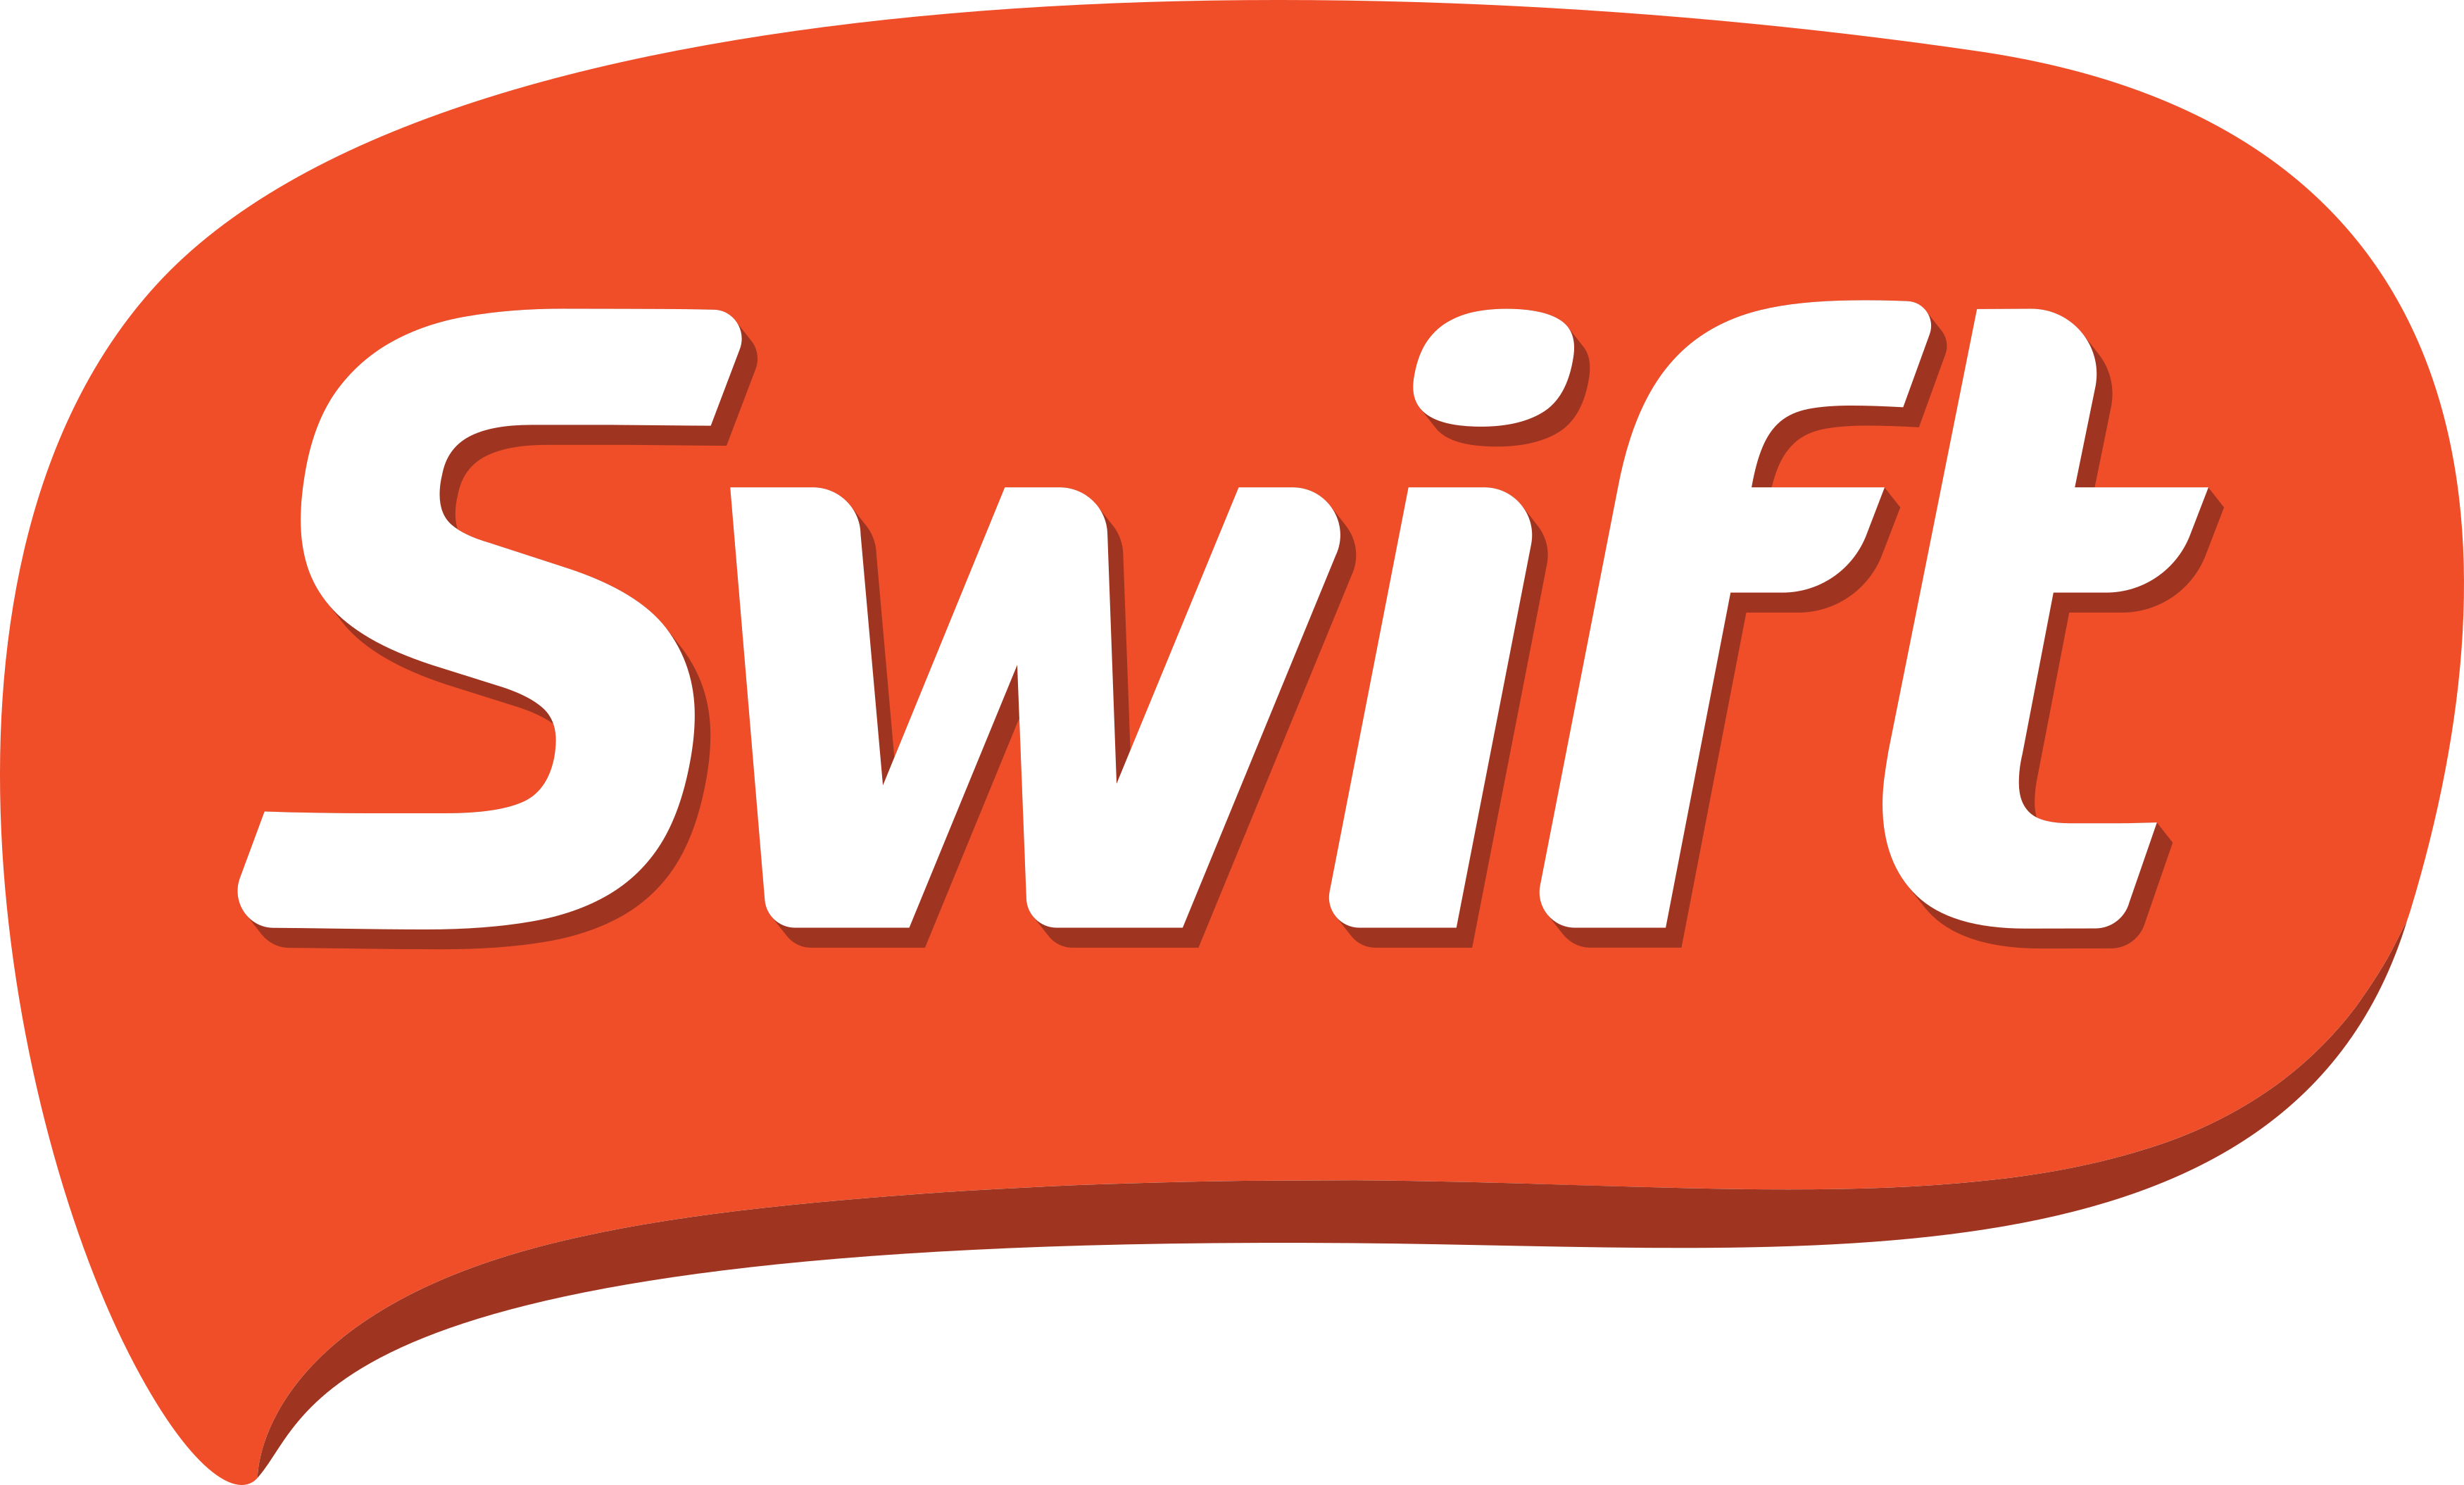 Swift Foods Logo.